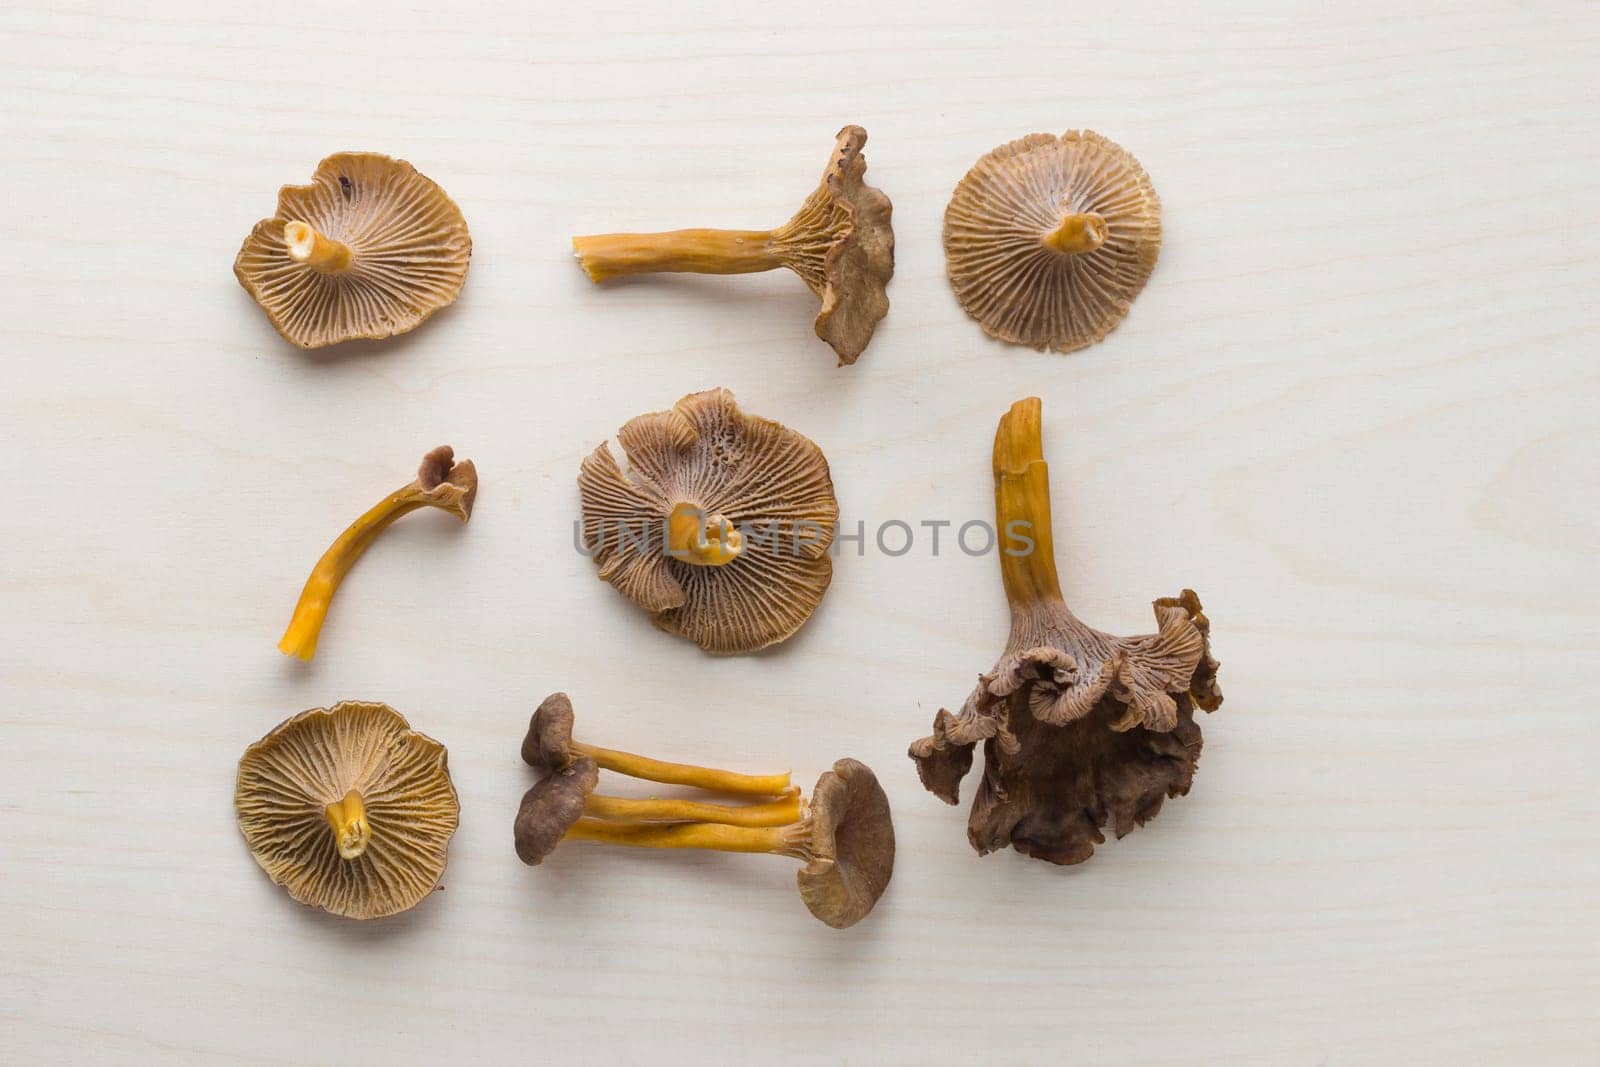 Craterellus cornucopioides, or horn of plenty, trumpet chanterelle mushroom, edible on wooden background.